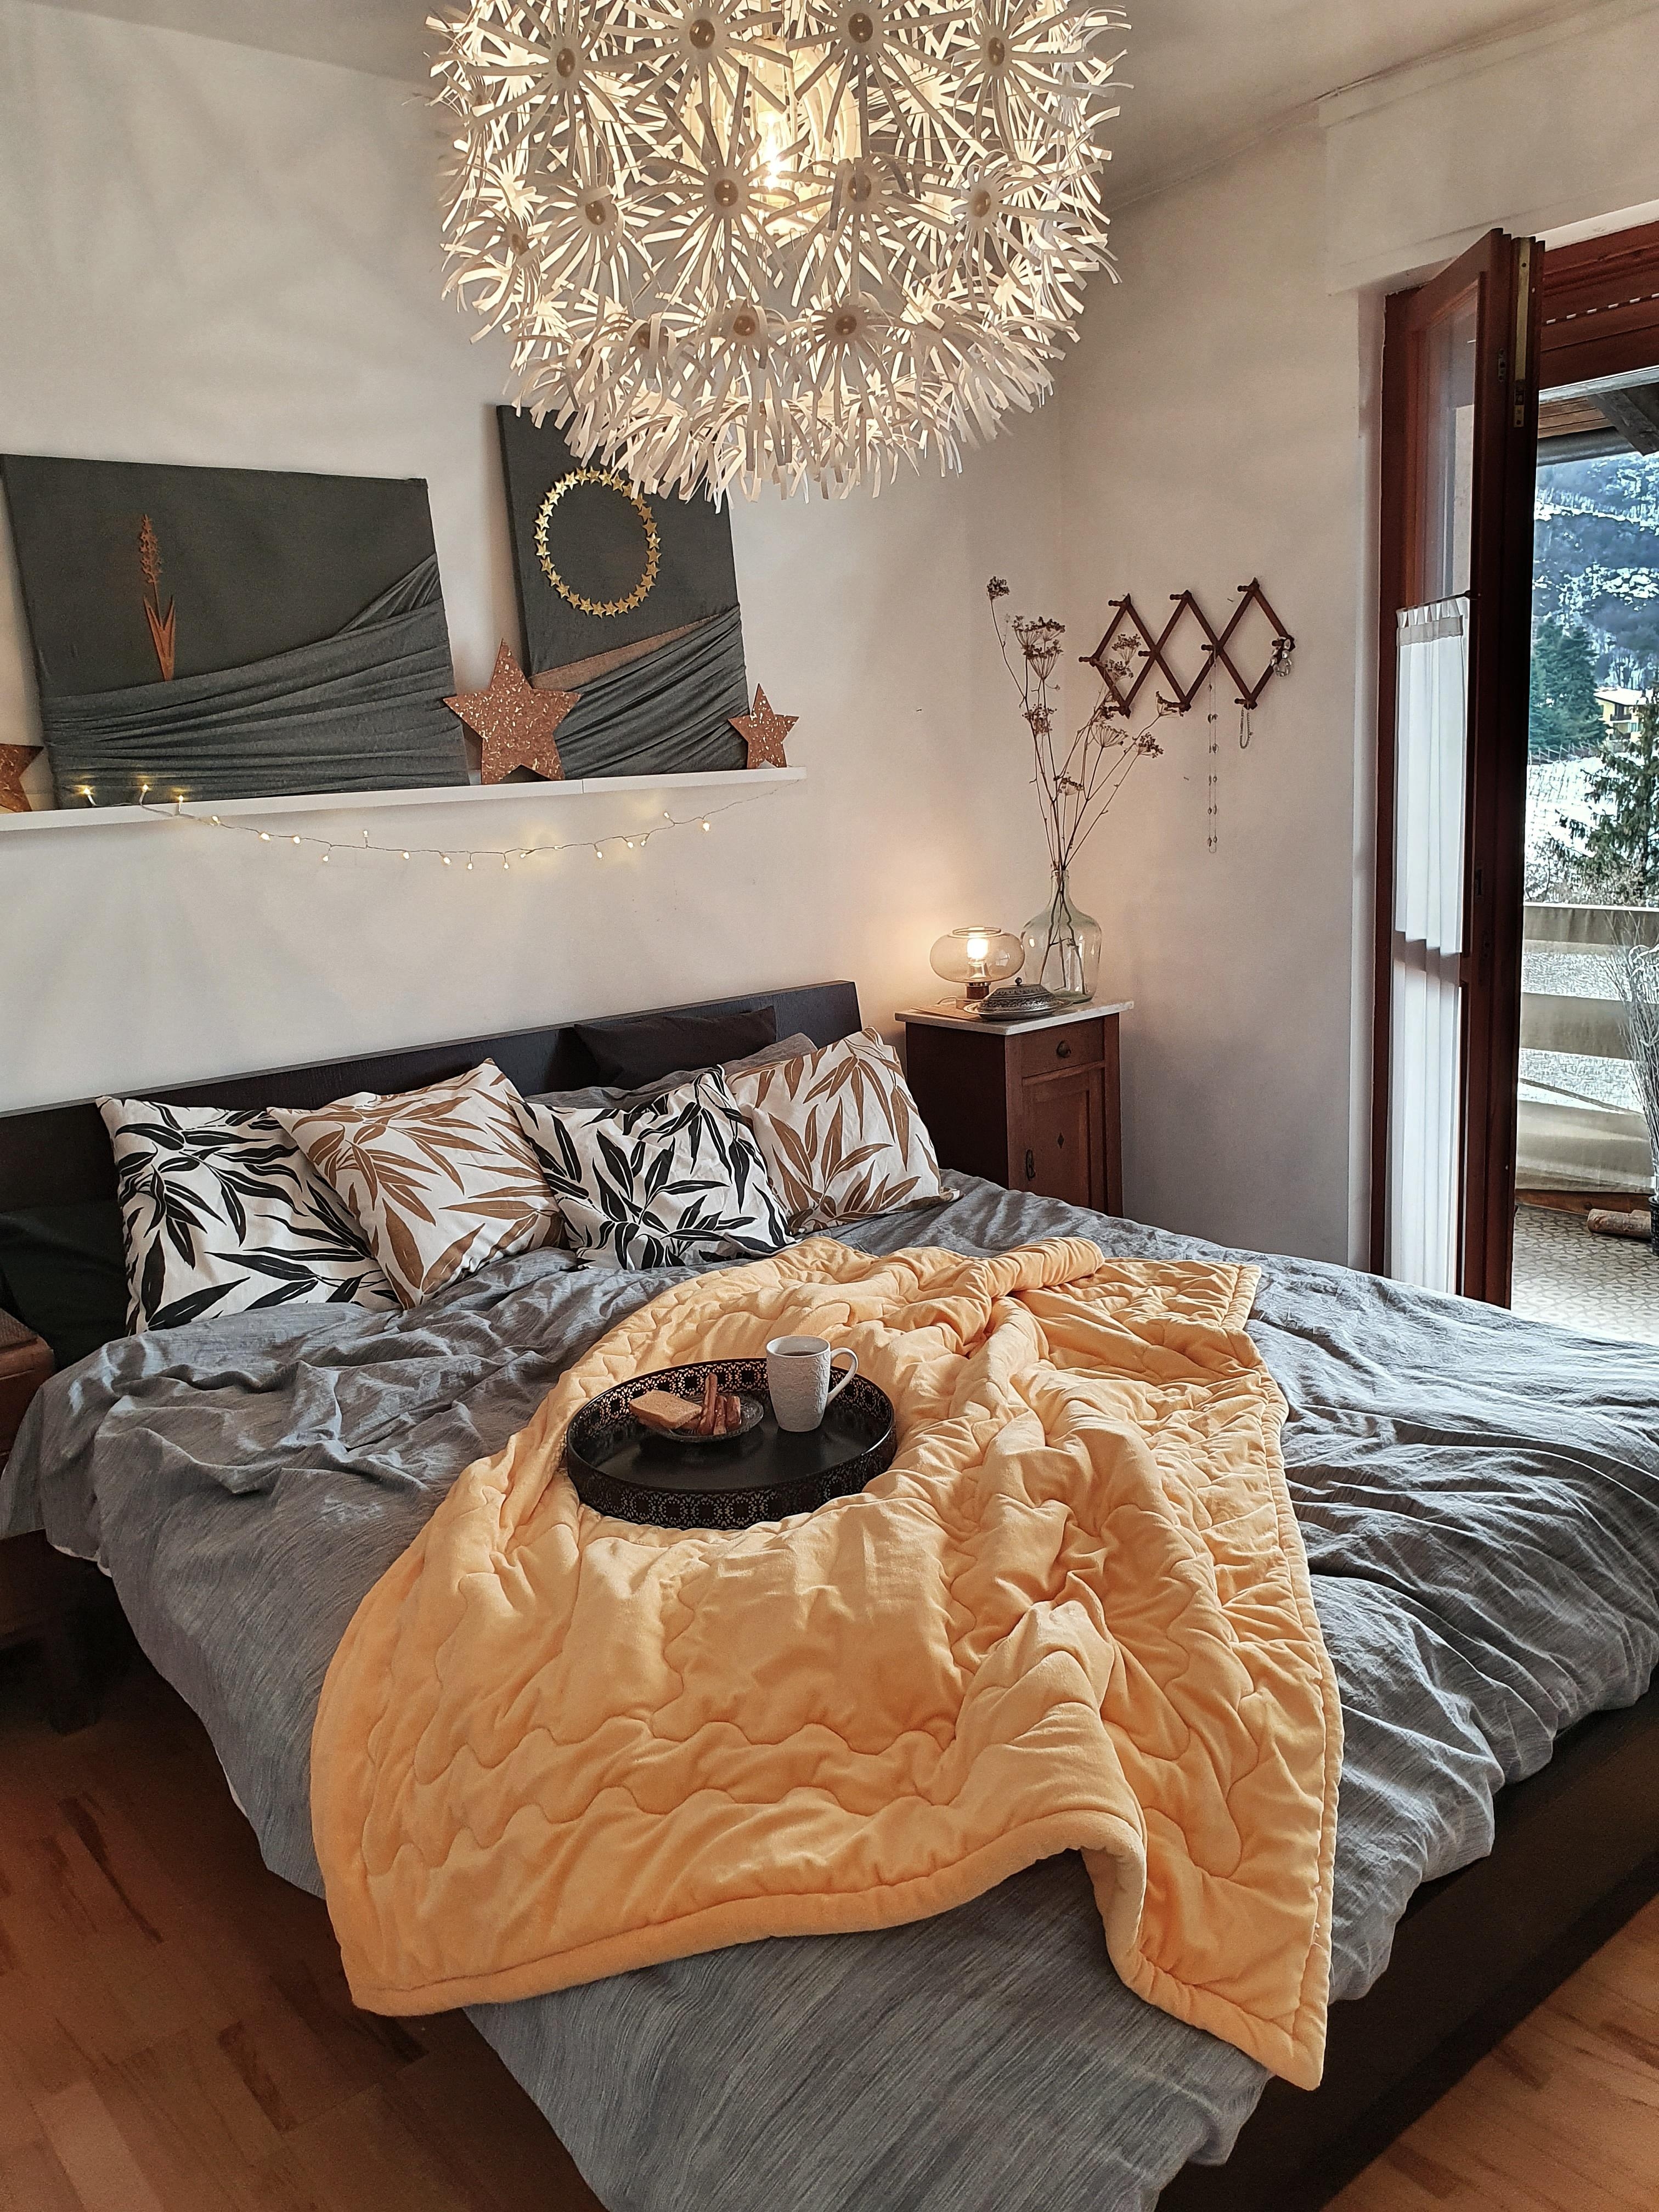 #interior #boho #hygge #hygge #cozy #bedroom #schlafzimmer #couchliebt